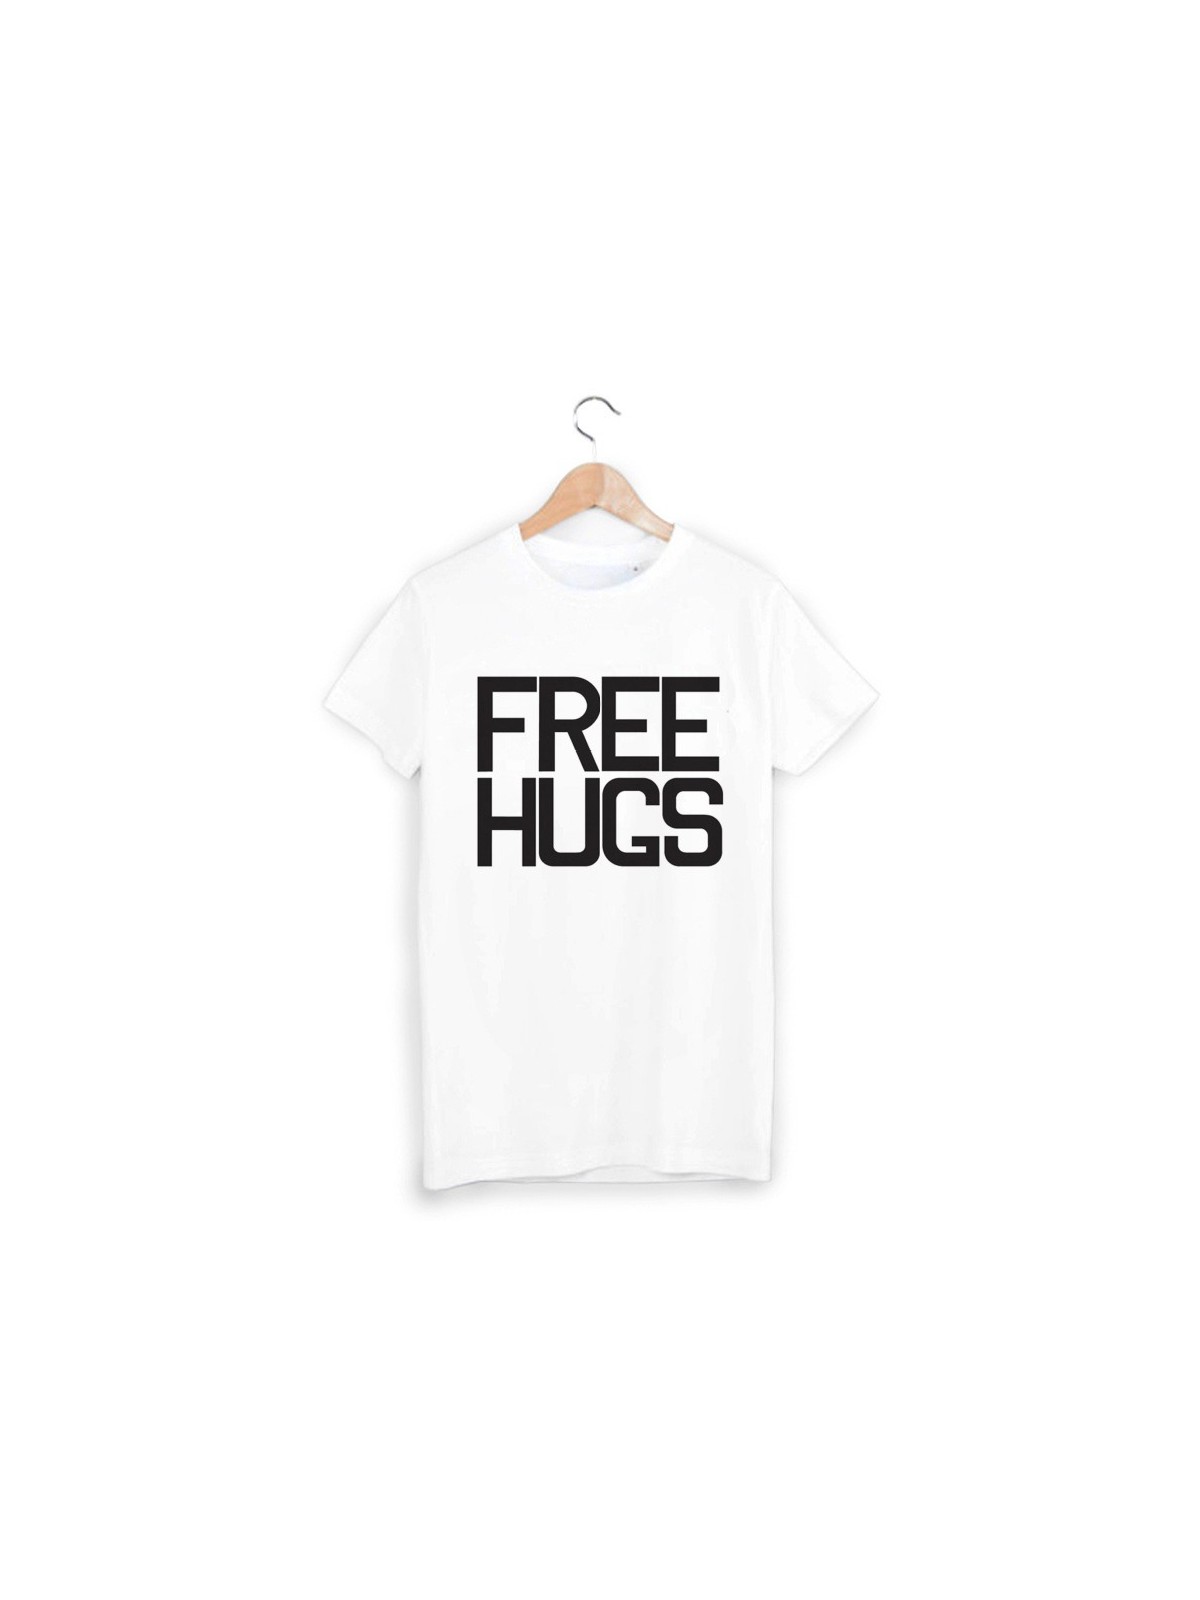 T-Shirt free hugs  ref 852